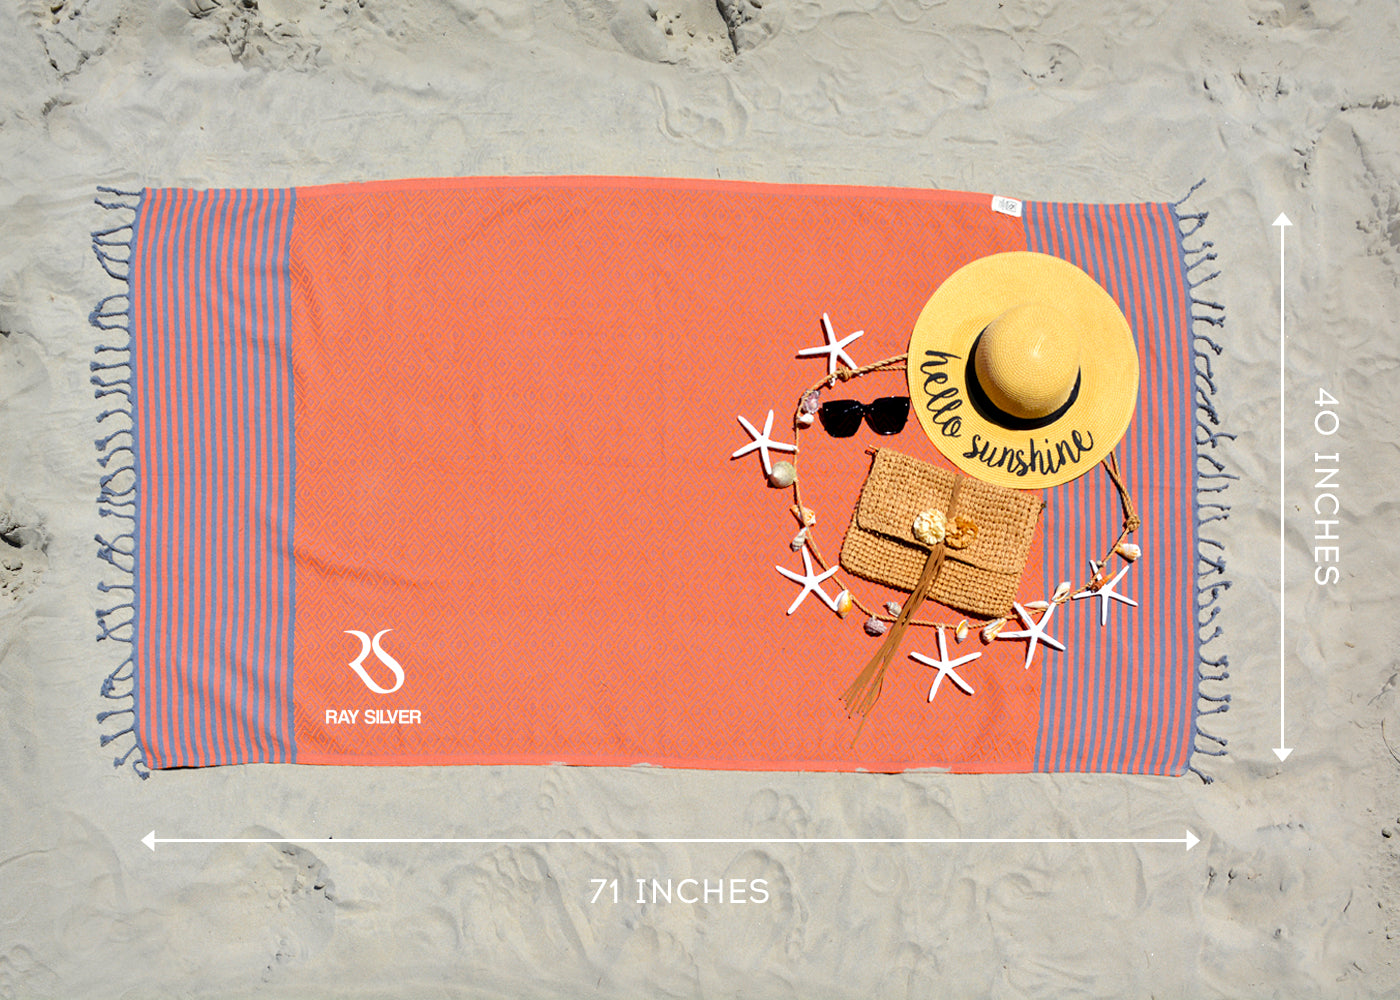 Microfiber Beach Towel (ORANGE/GREY)